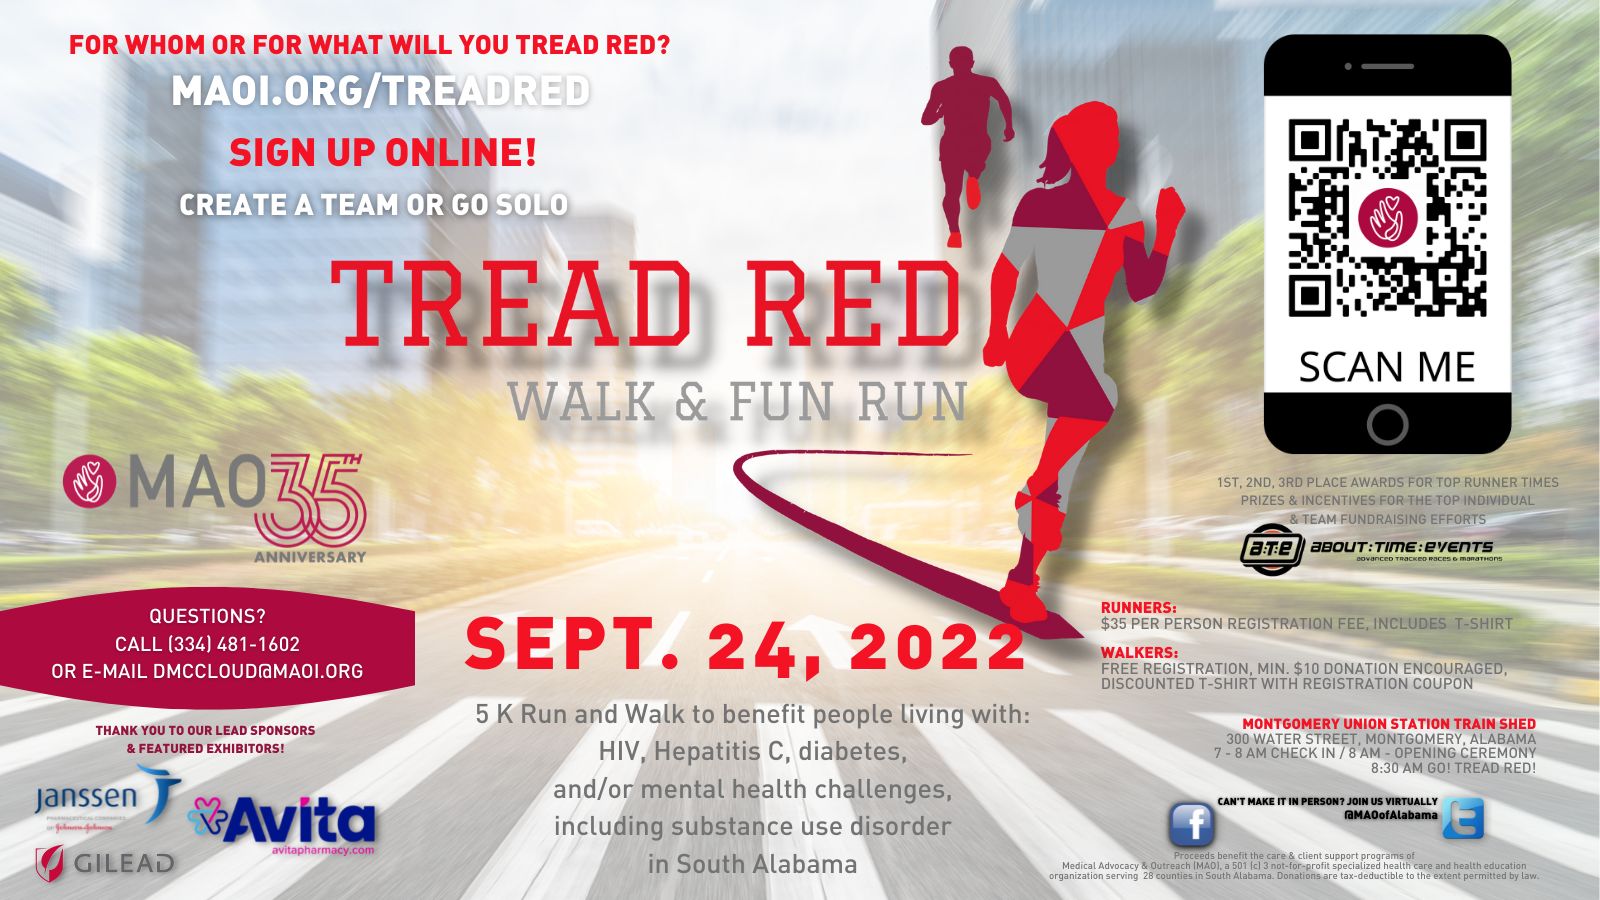 Tread Red Walk and Fun Run 2022, Montgomery, Alabama, United States